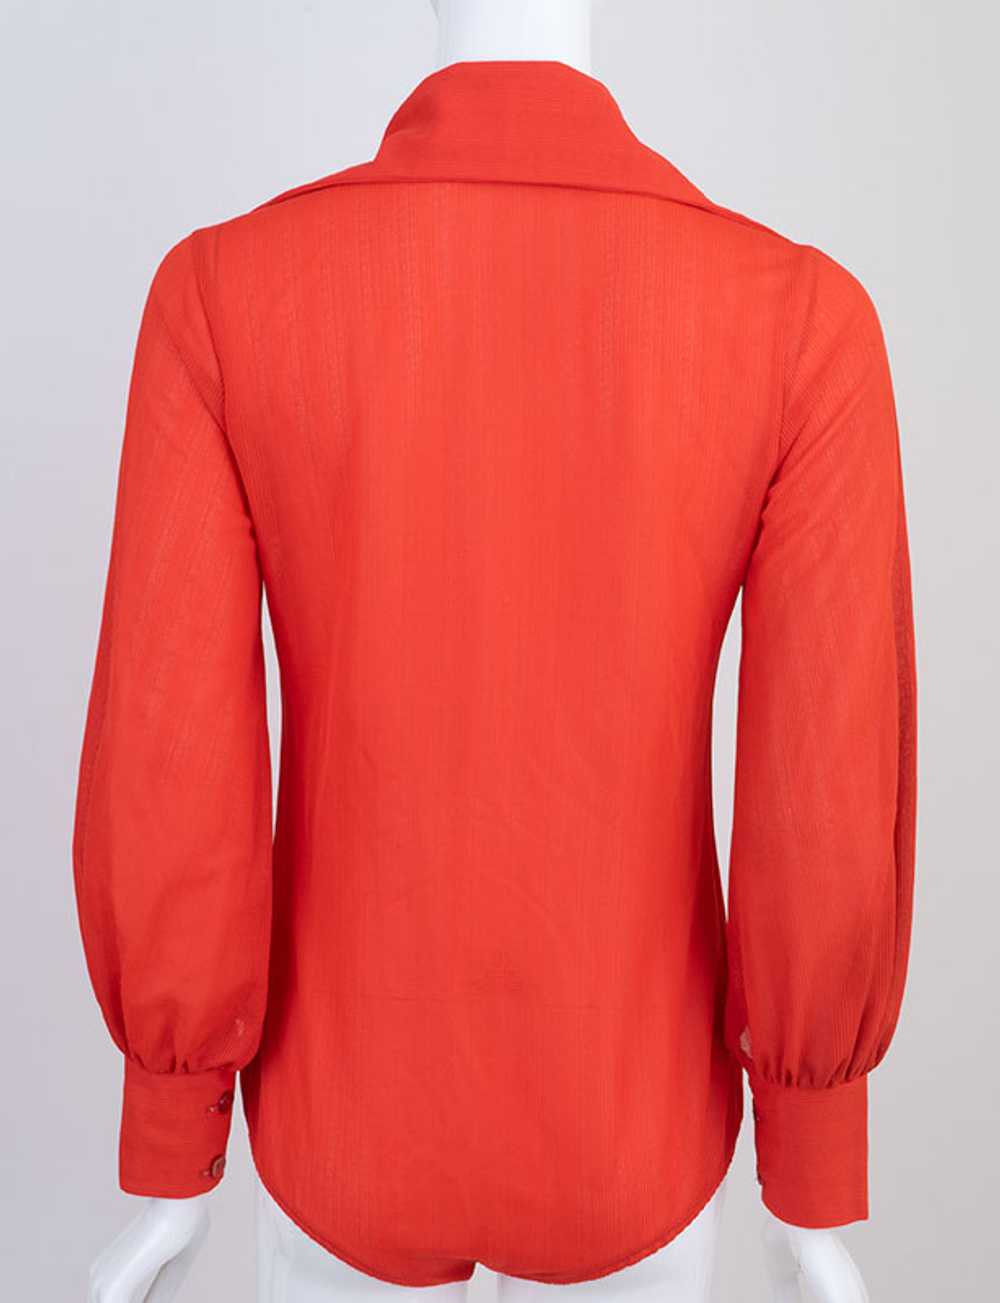 Red 1970s Bodysuit - image 3